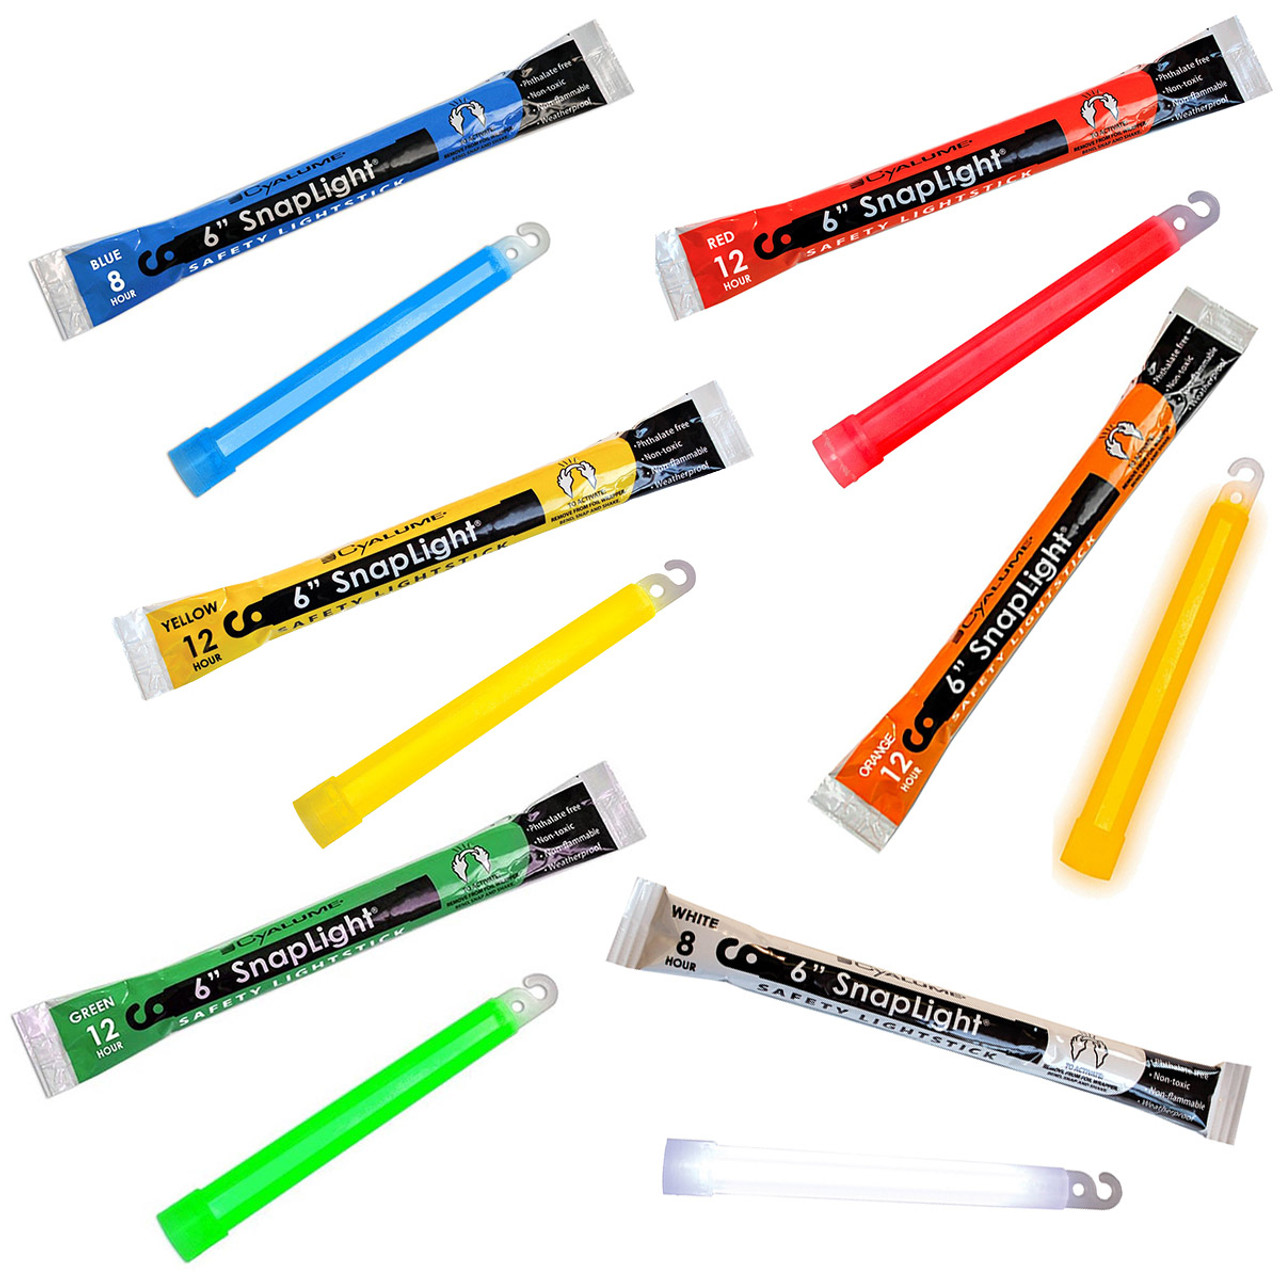 Buy Cyalume SnapLight 6 Inch Orange Light Sticks